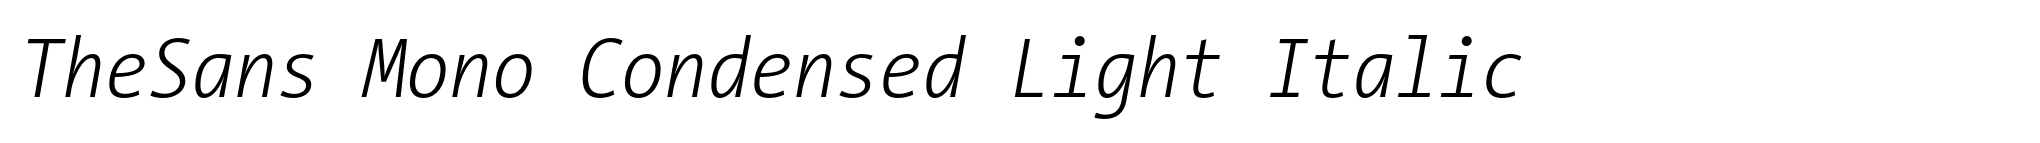 TheSans Mono Condensed Light Italic image